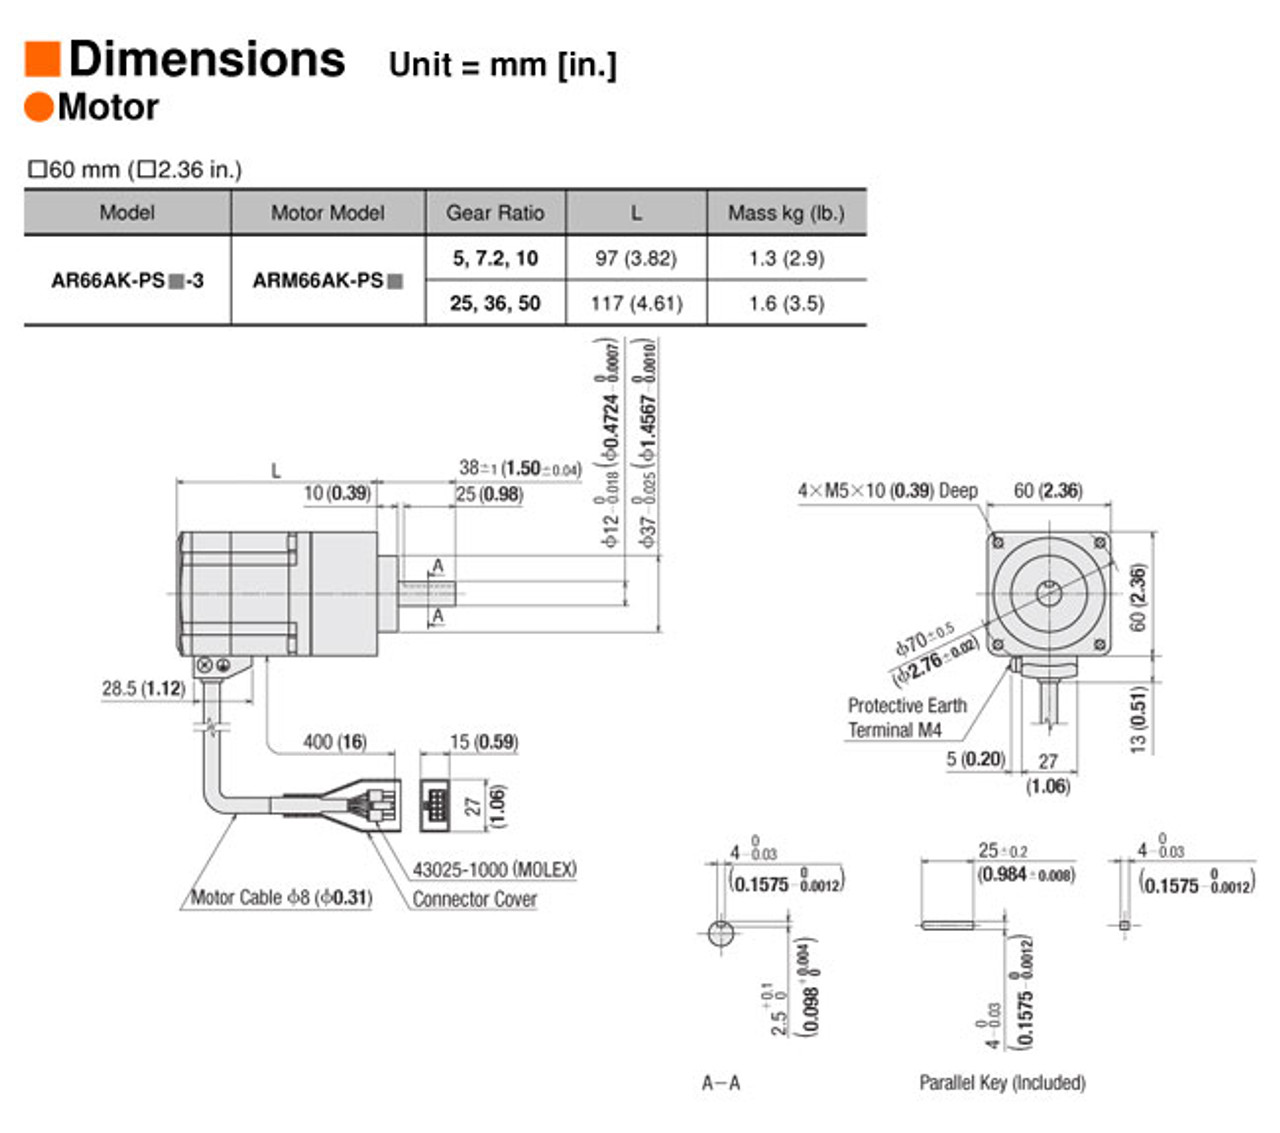 AR66AK-PS5-3 - Dimensions